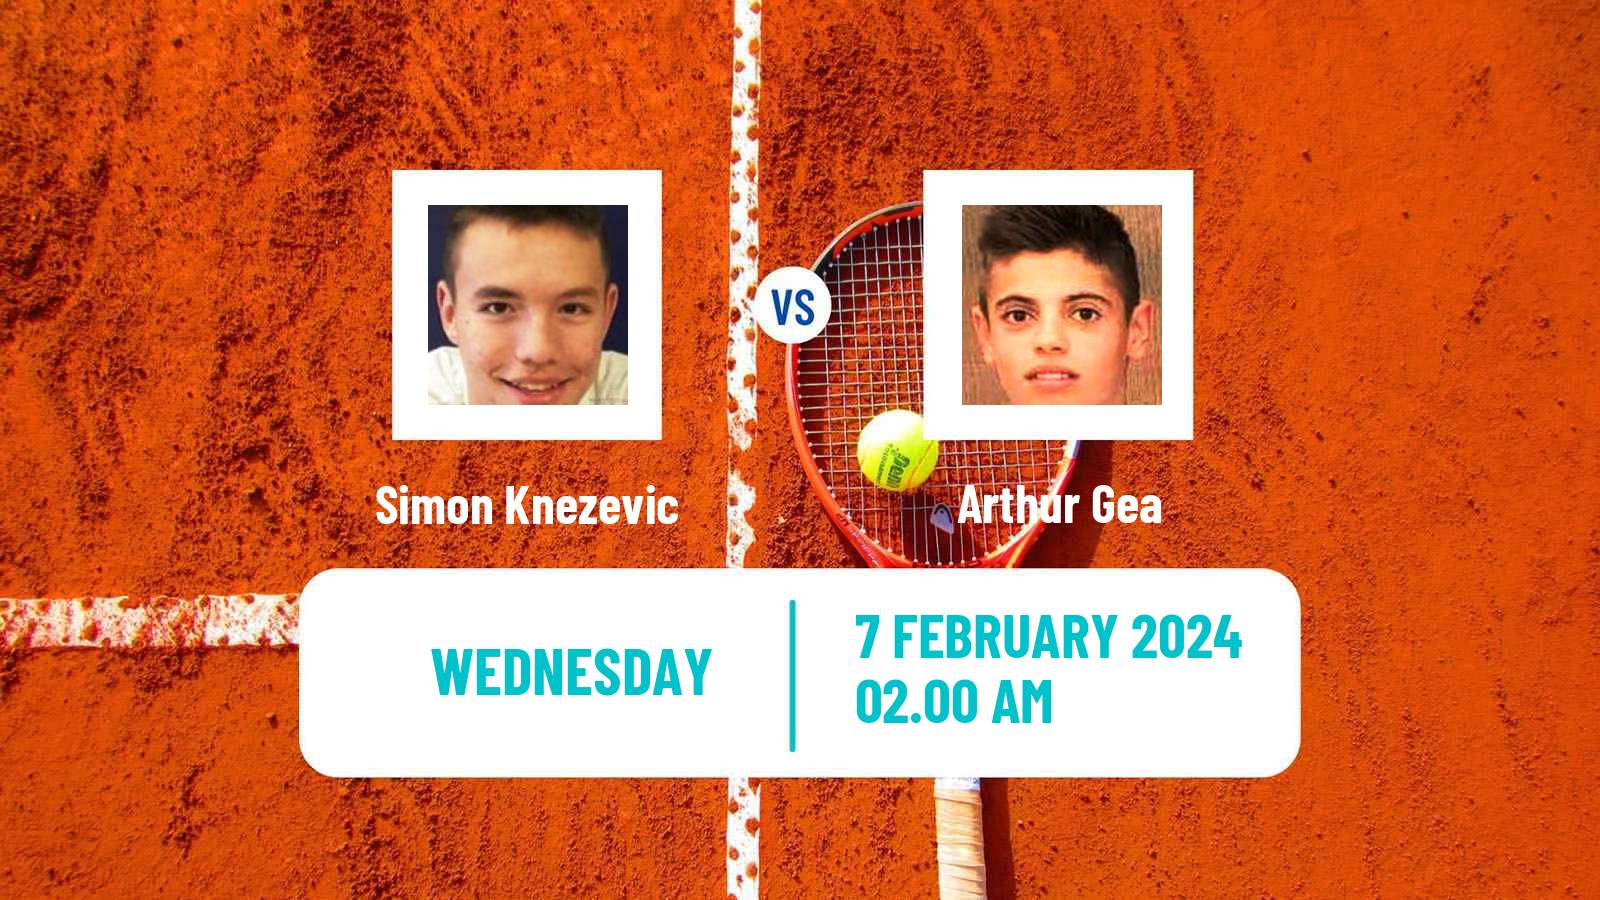 Tennis ITF M25 Antalya 2 Men Simon Knezevic - Arthur Gea